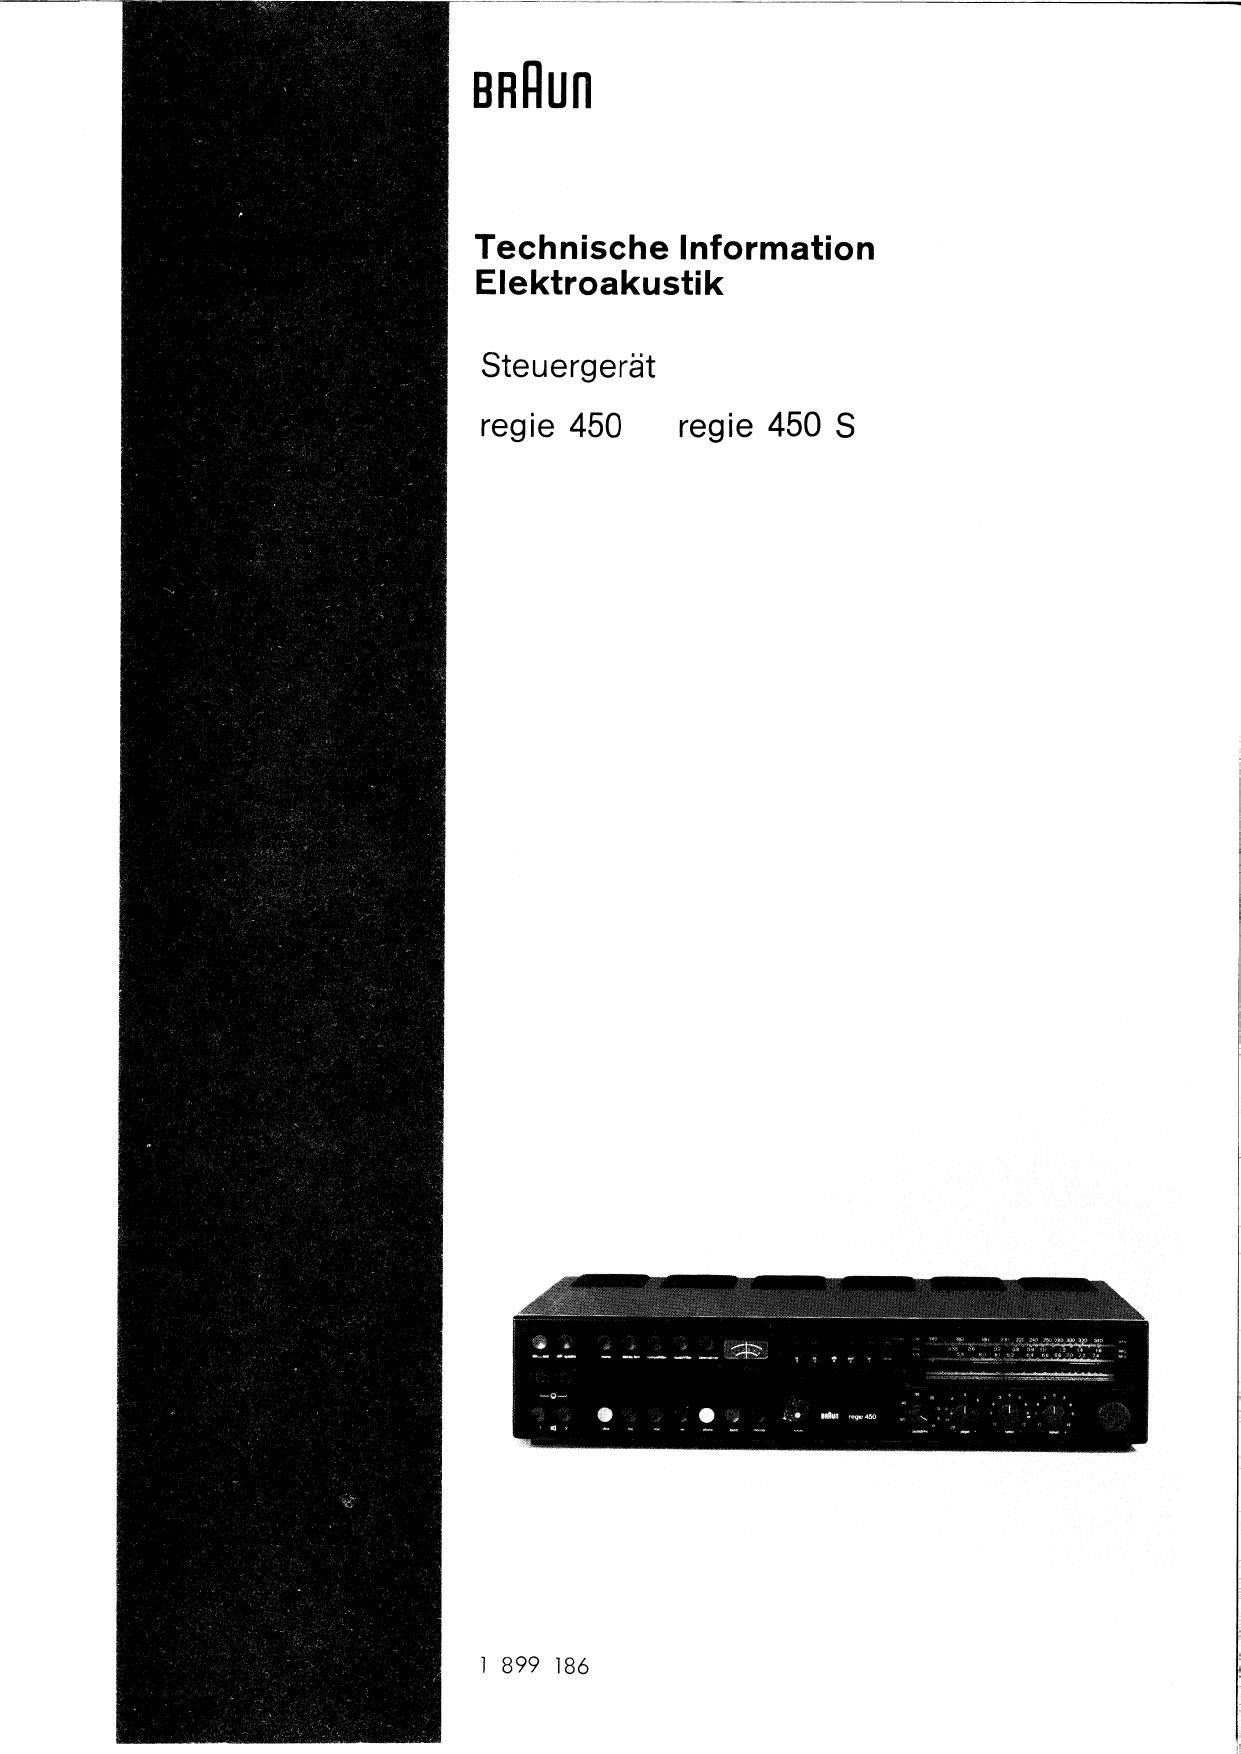 Braun Regie 450 S Service Manual